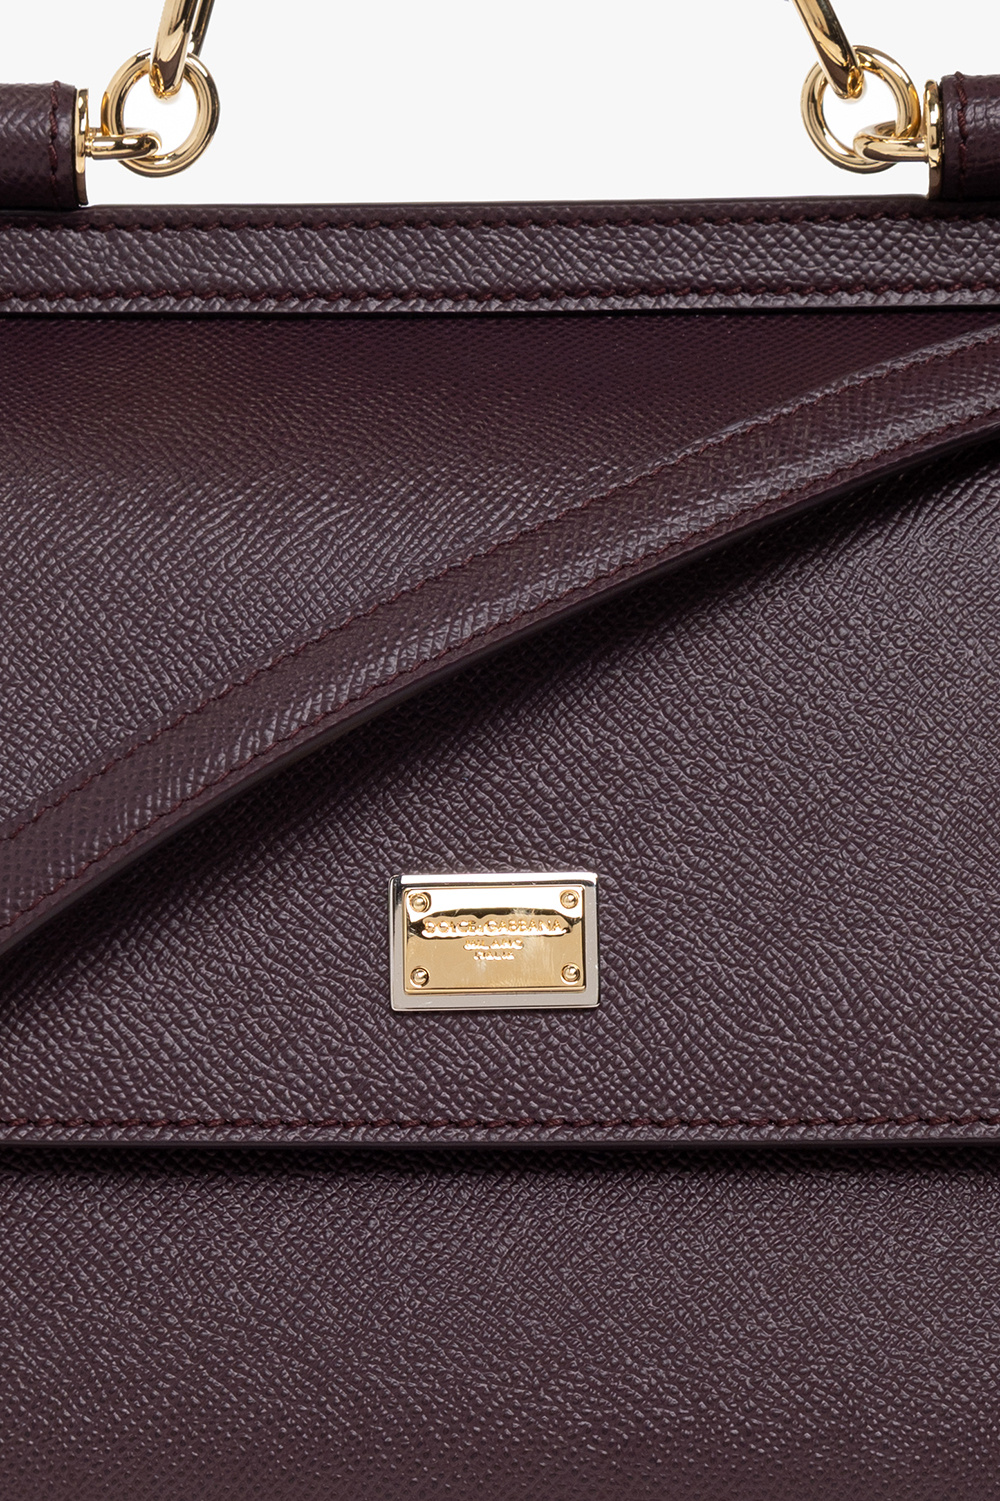 Dolce & Gabbana Brand New Small dauphine leather Sicily bag-purple